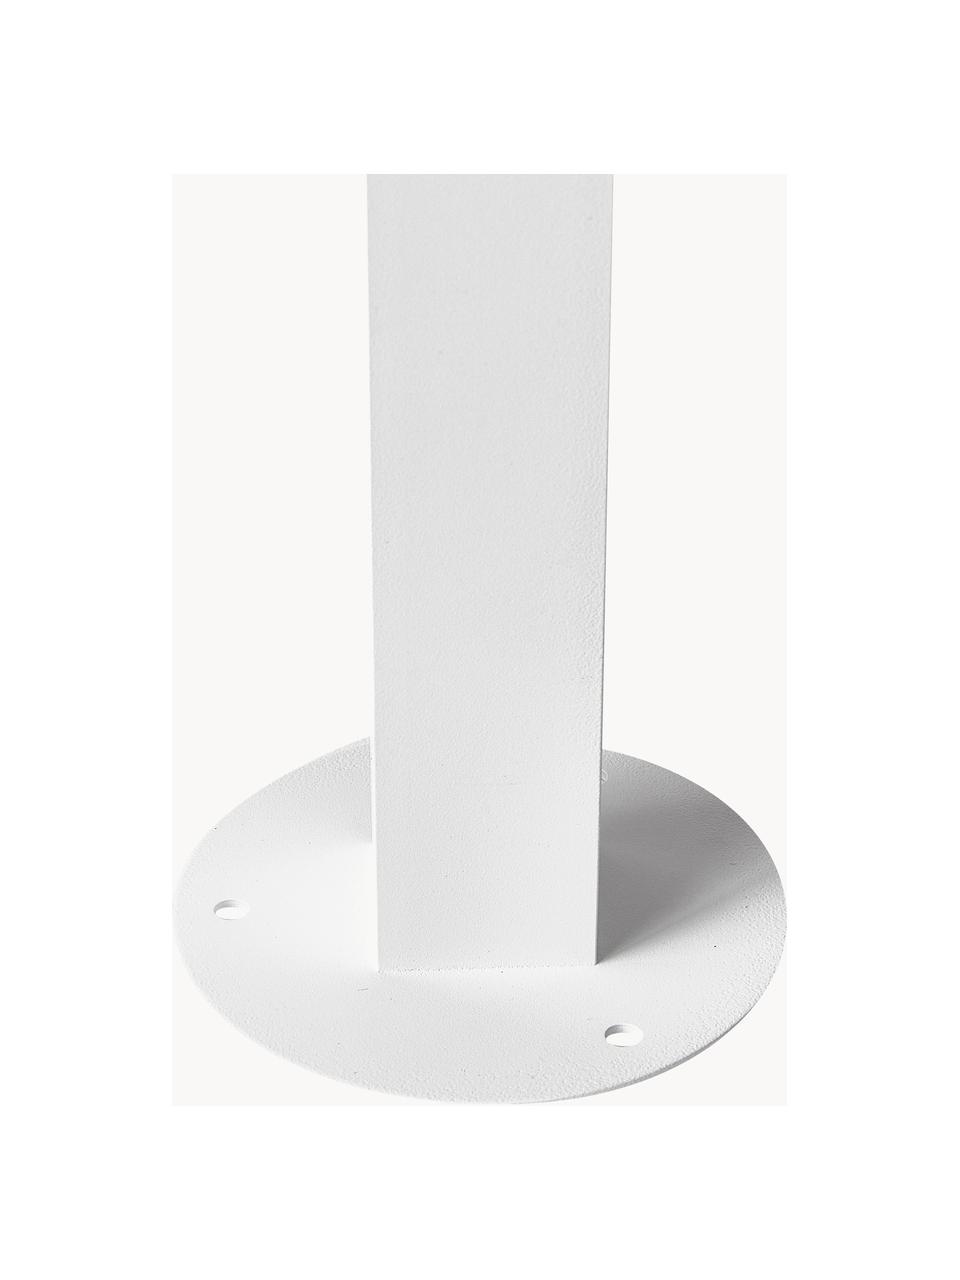 Dimmbare Outdoor-Stehlampe Coupar, Weiß, Ø 14 x H 80 cm